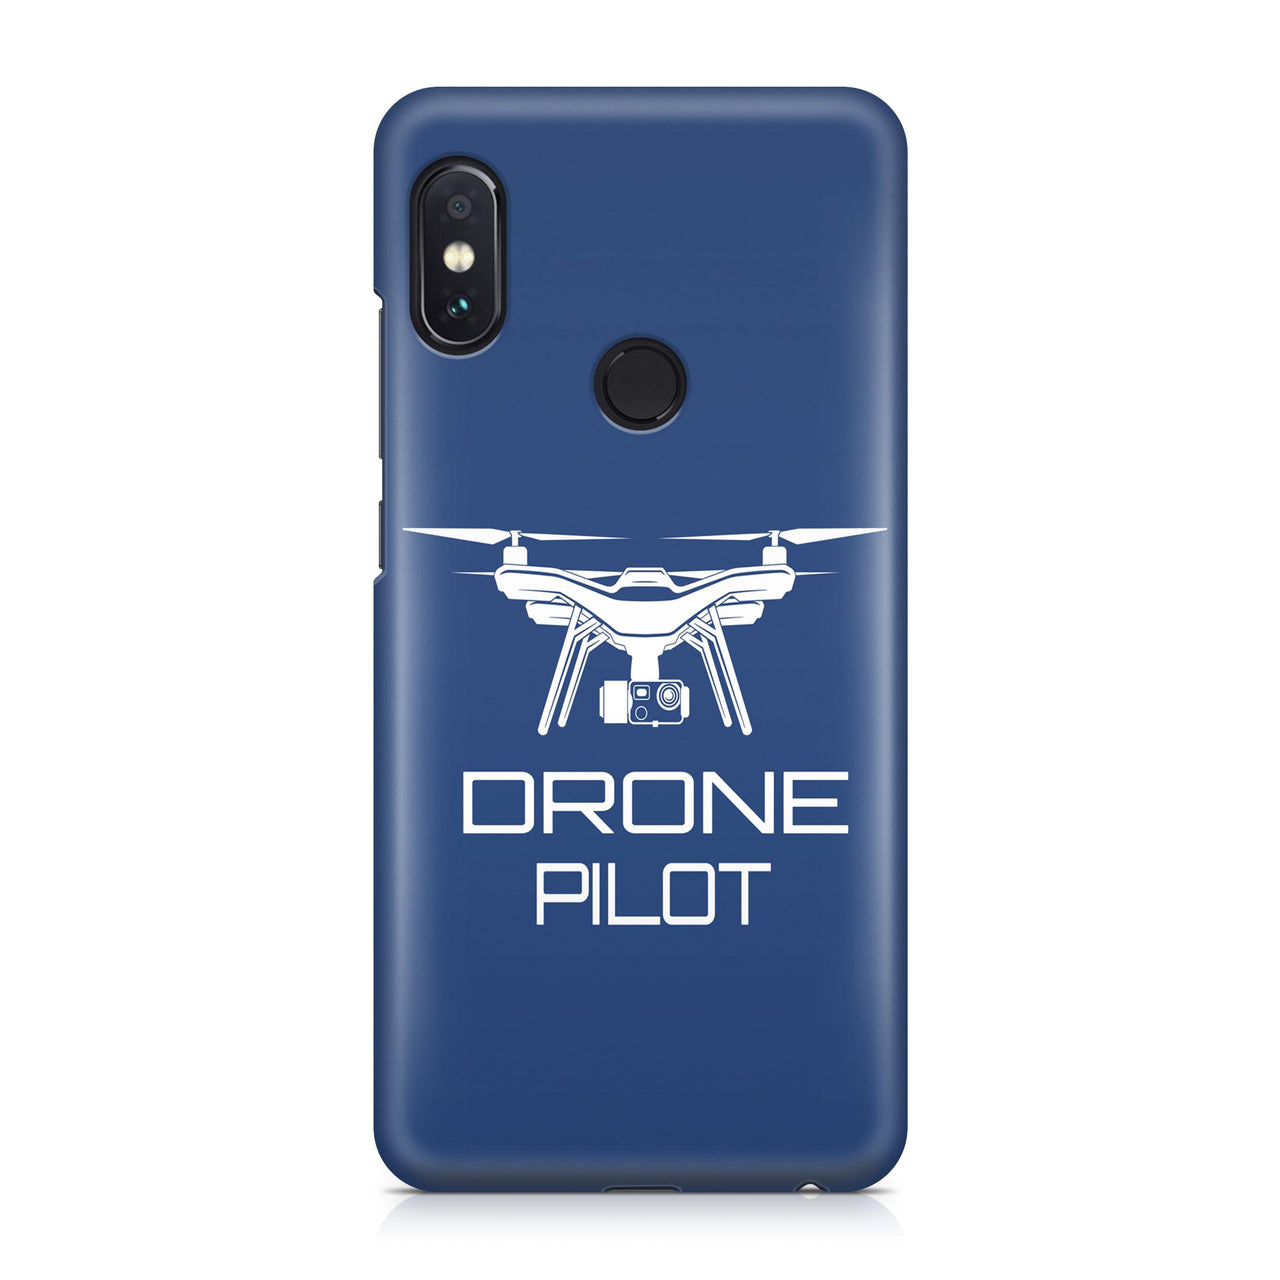 Drone Pilot Designed Xiaomi Cases